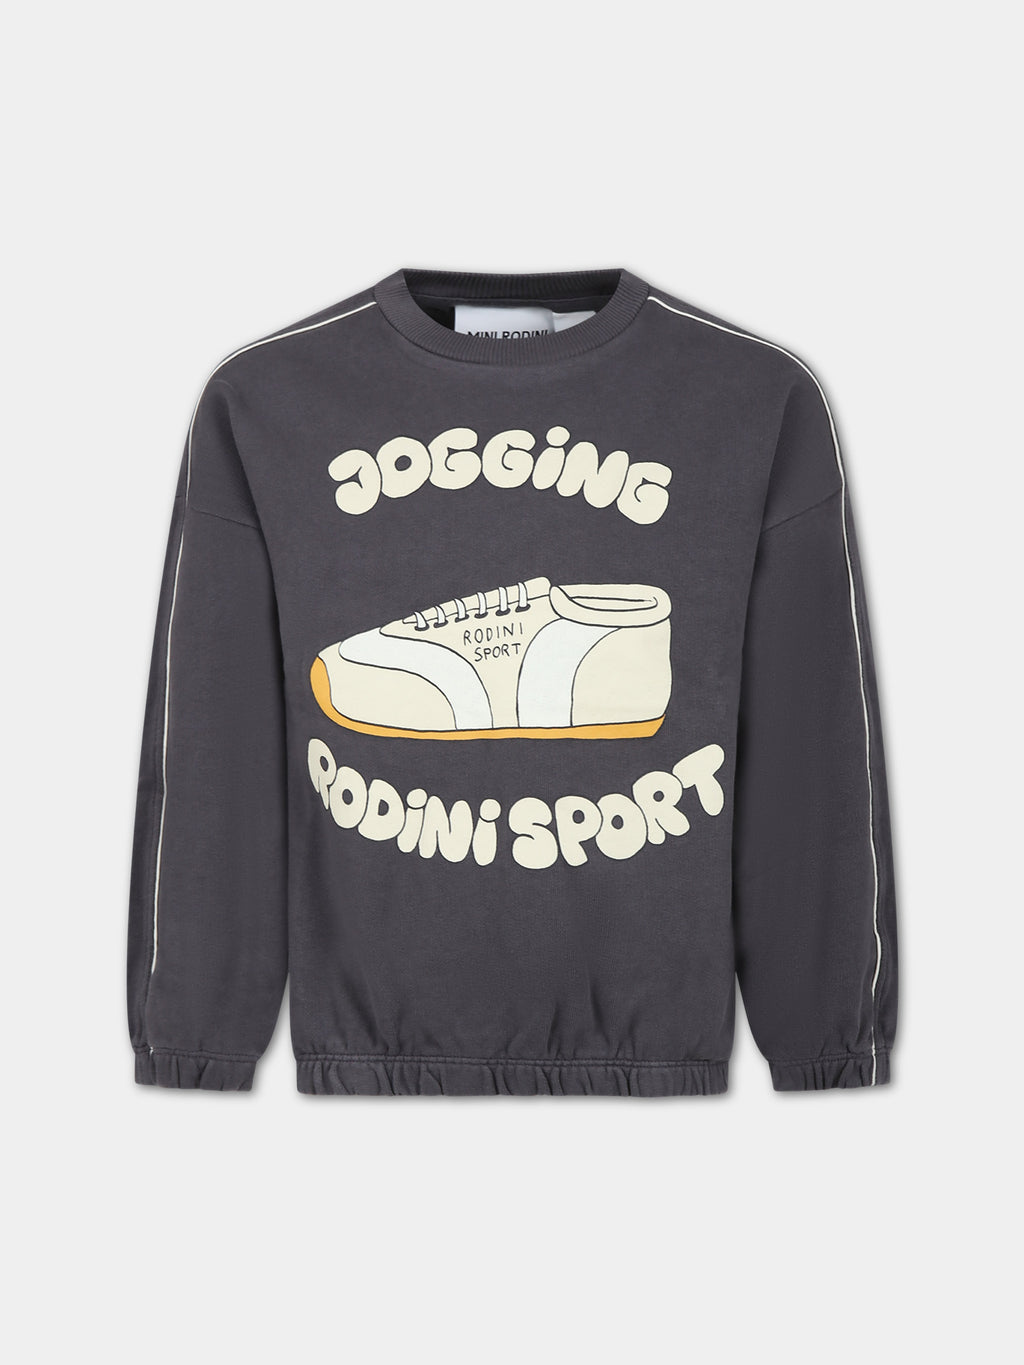 Gray sweatshirt for kids with jogging sneakers print